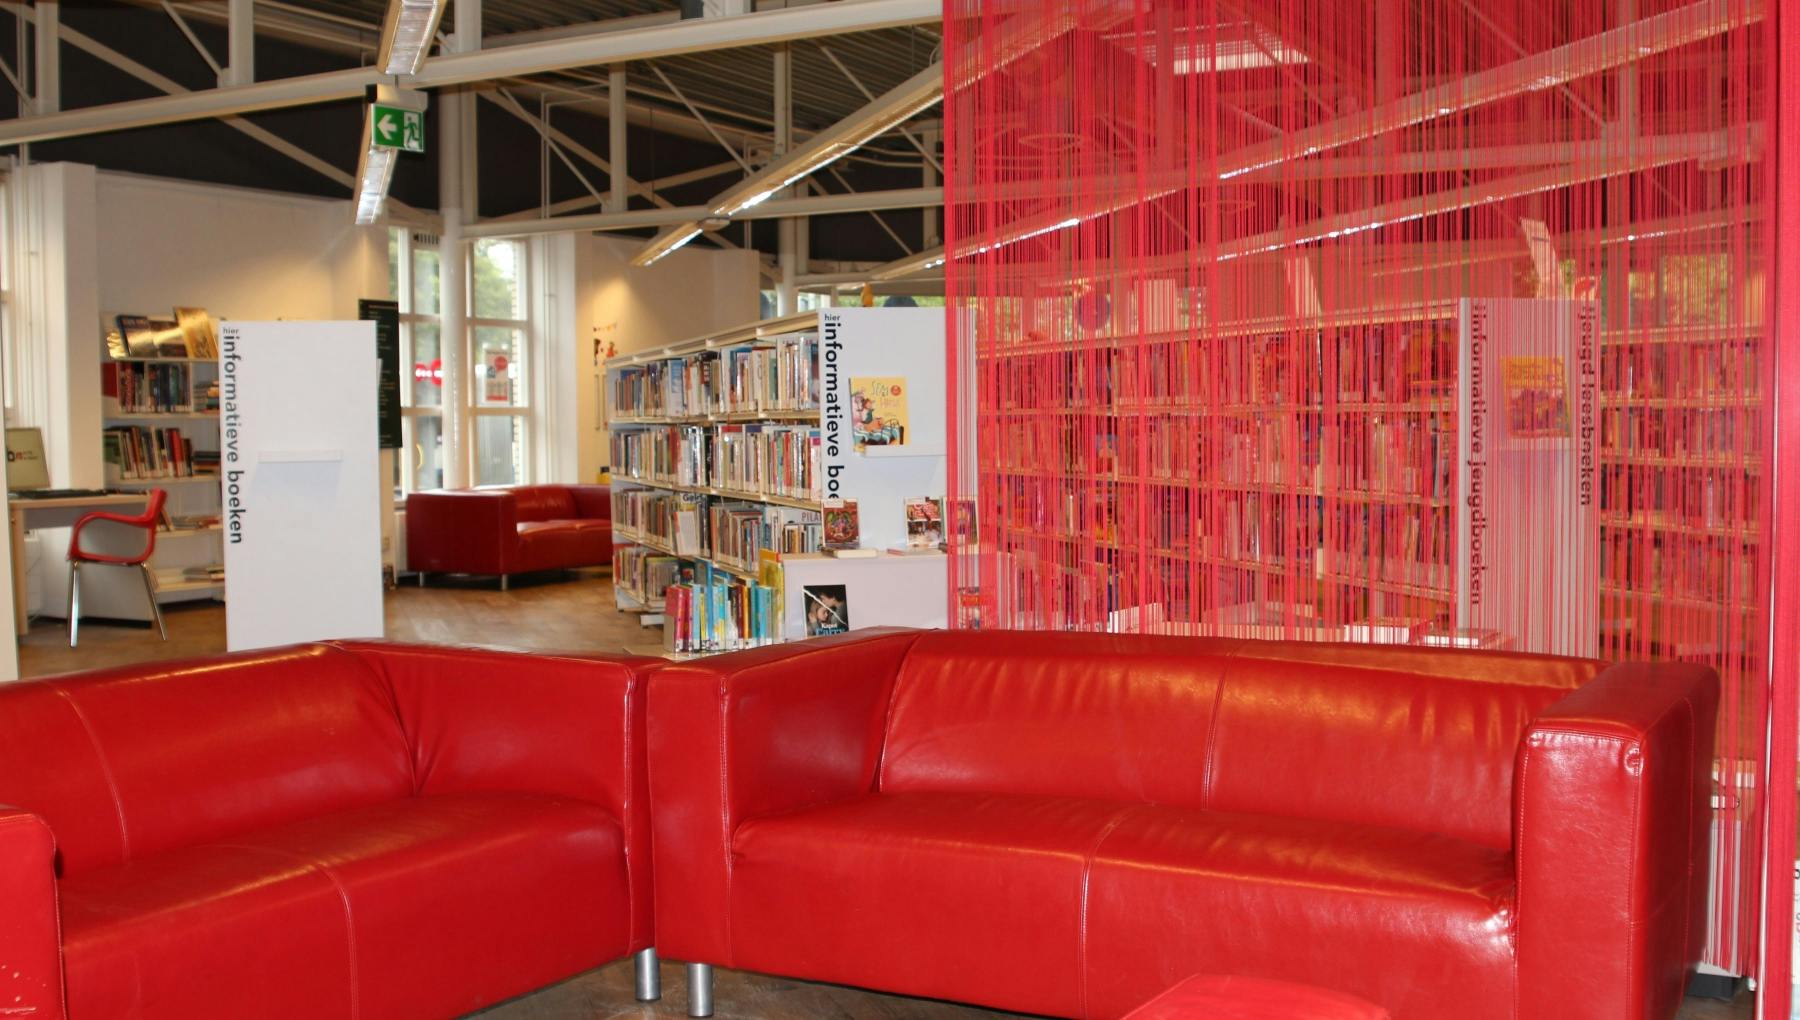 Molenwijk Branch Amsterdam Public Library (OBA Molenwijk)